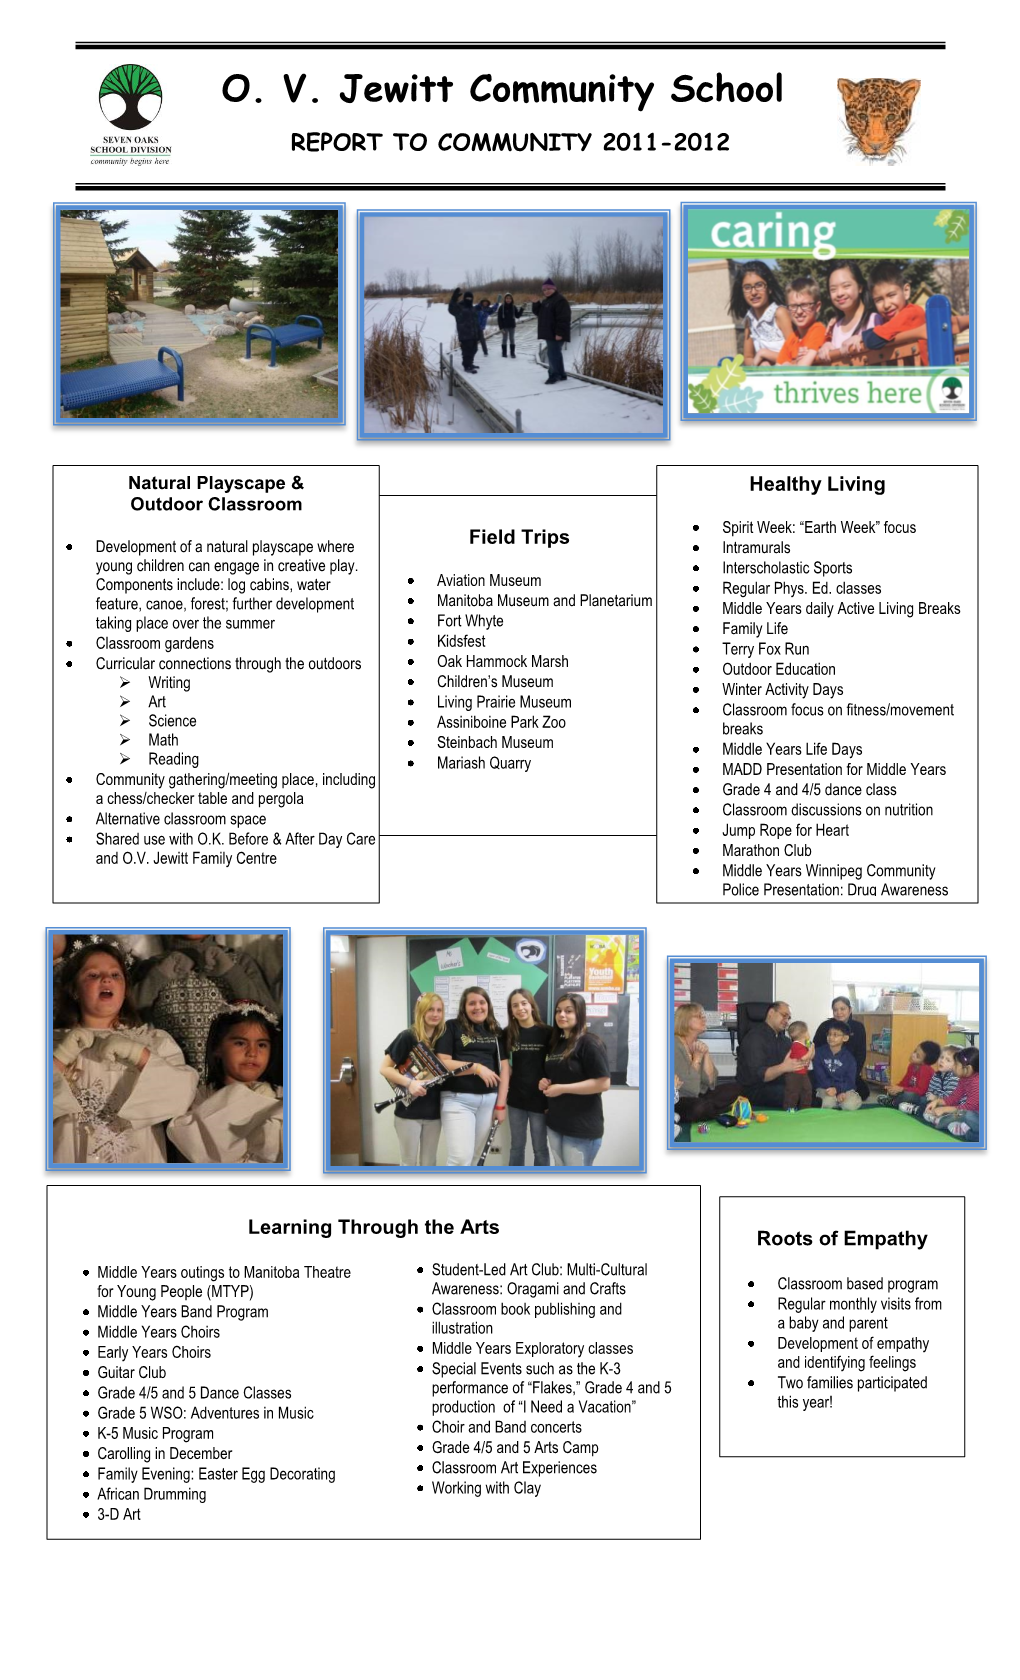 O. V. Jewitt Community School REPORT to COMMUNITY 2011-2012